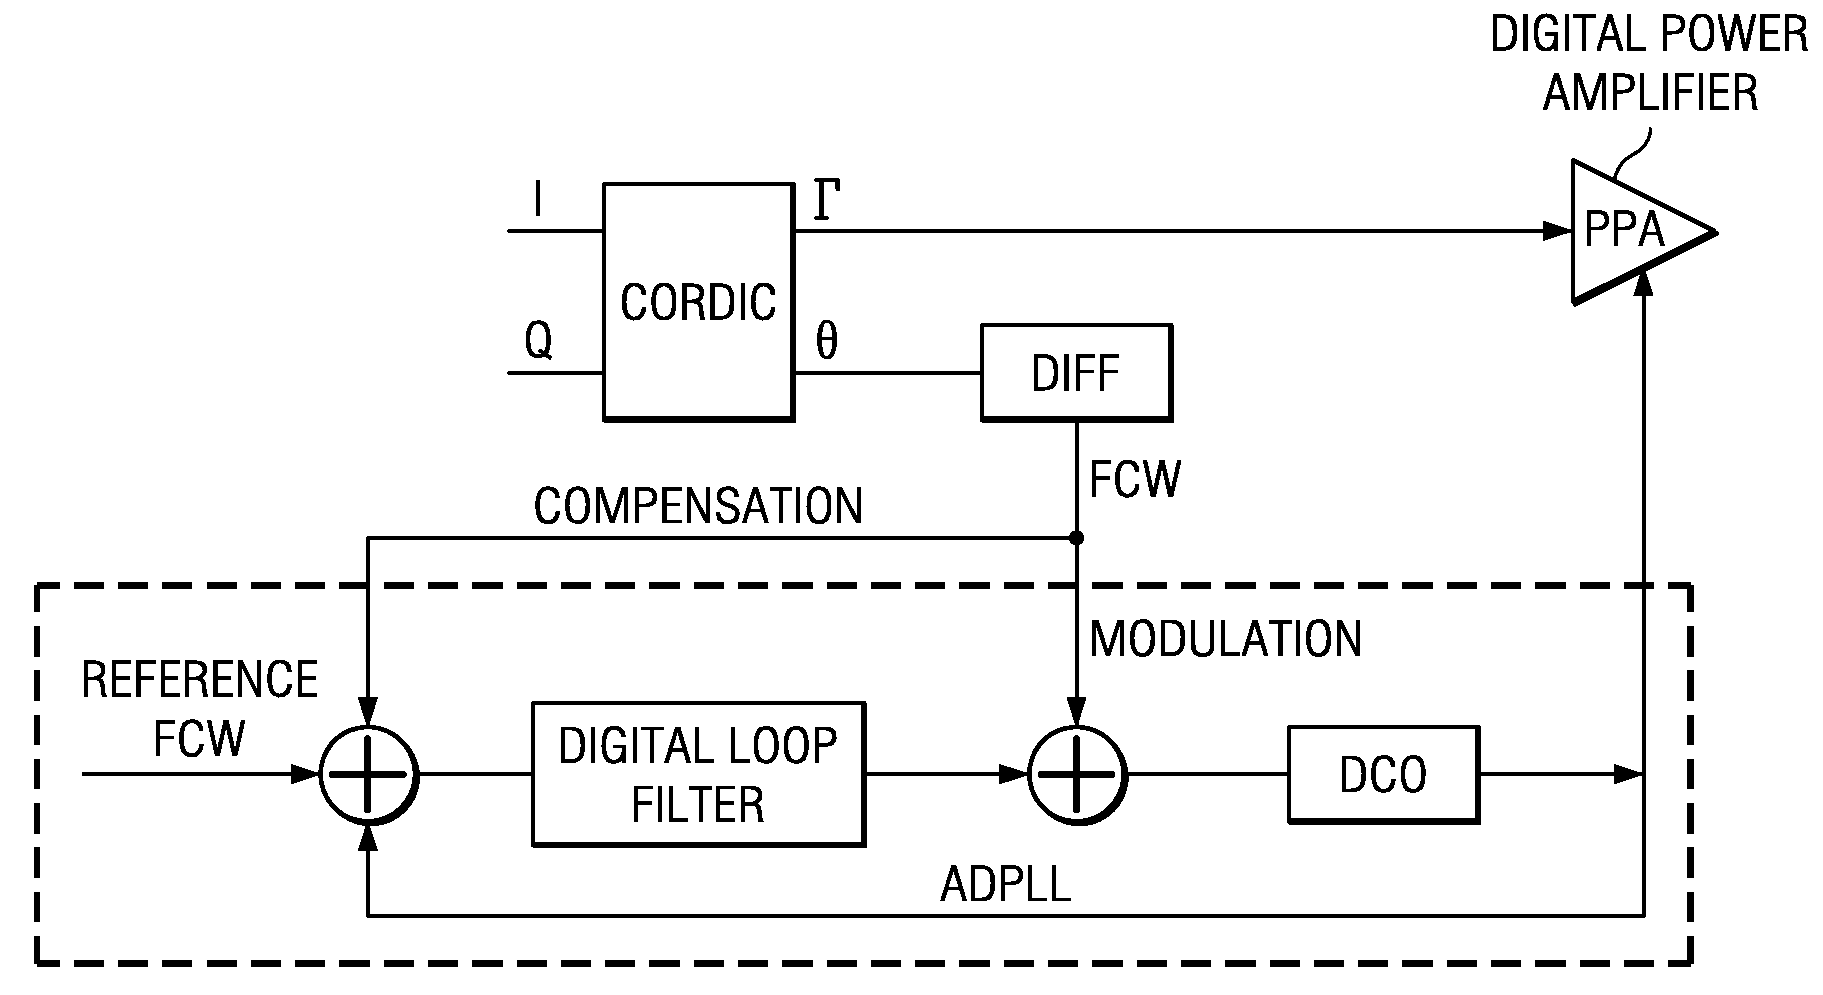 Digital radio processor architecture with reduced dco modulation range requirement